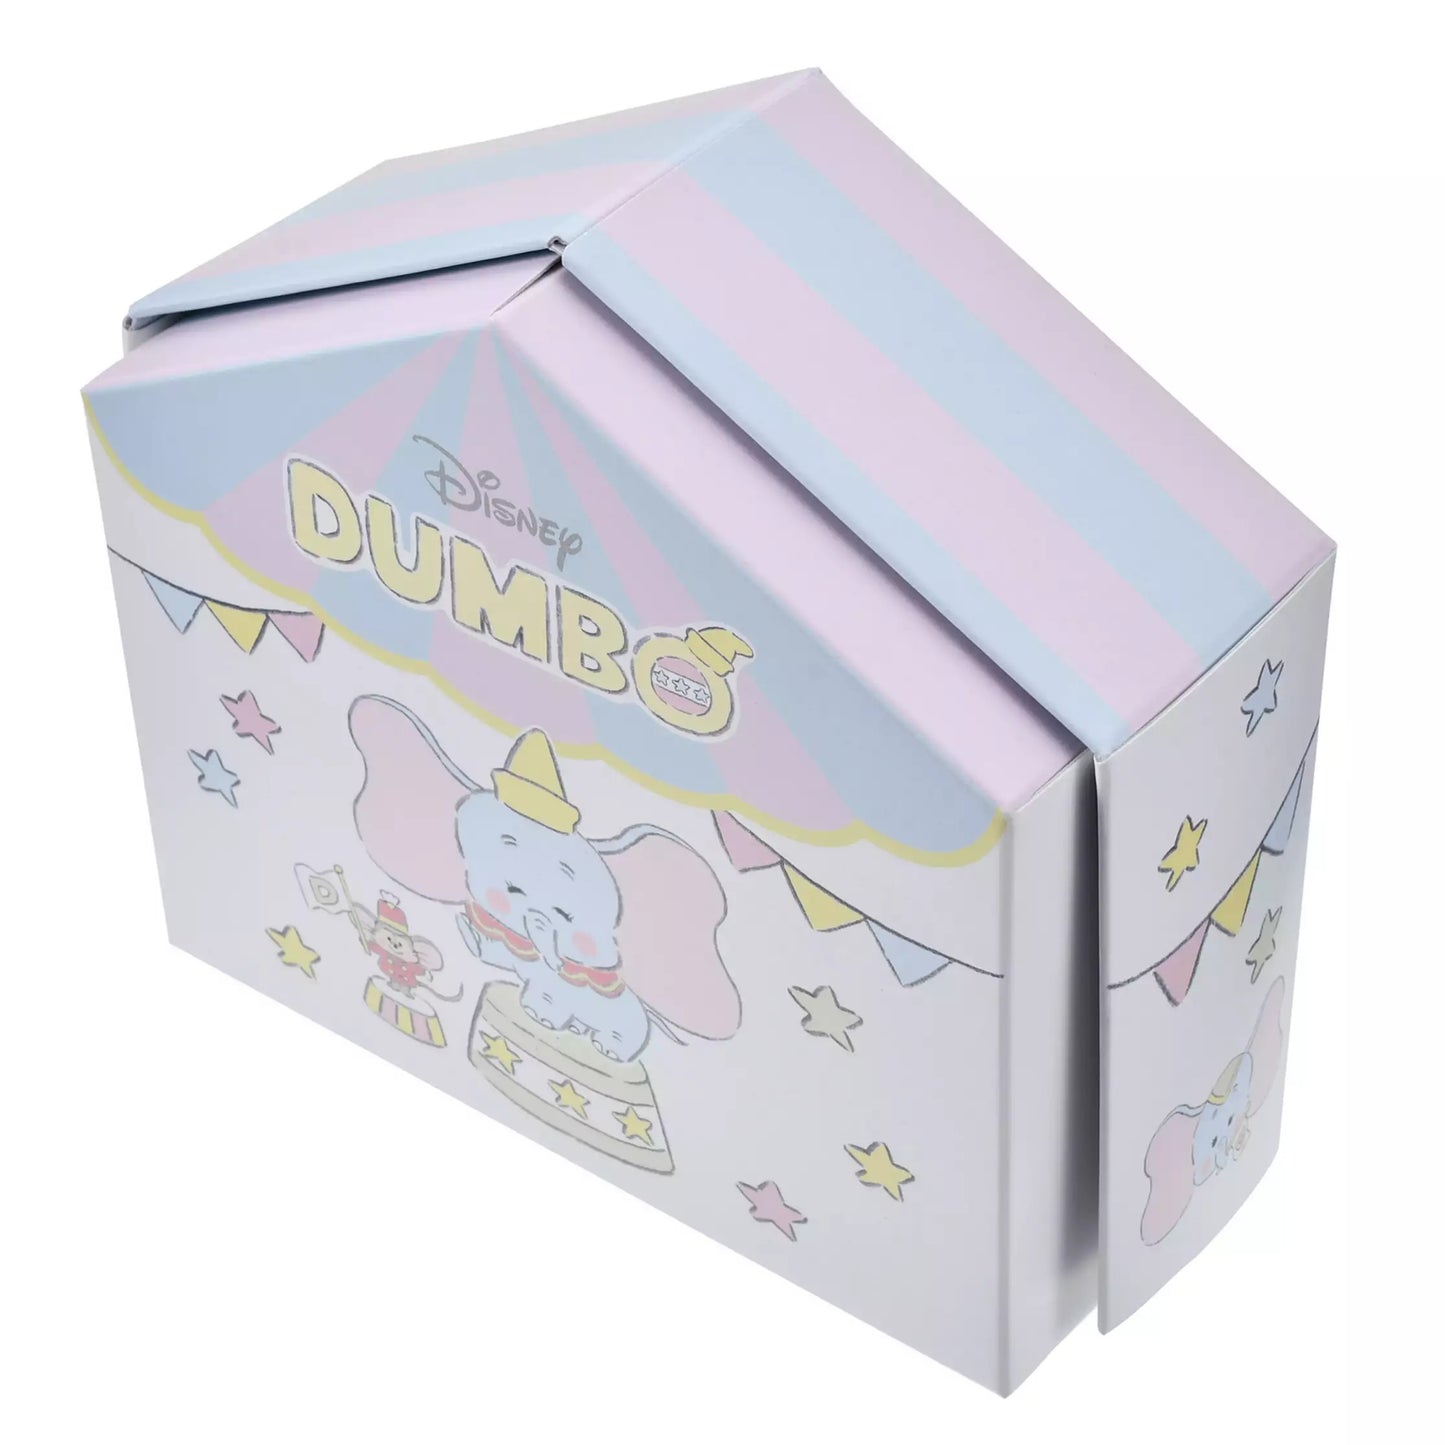 Dumbo 曲奇盒 Illustrated by Noriyuki Echigawa